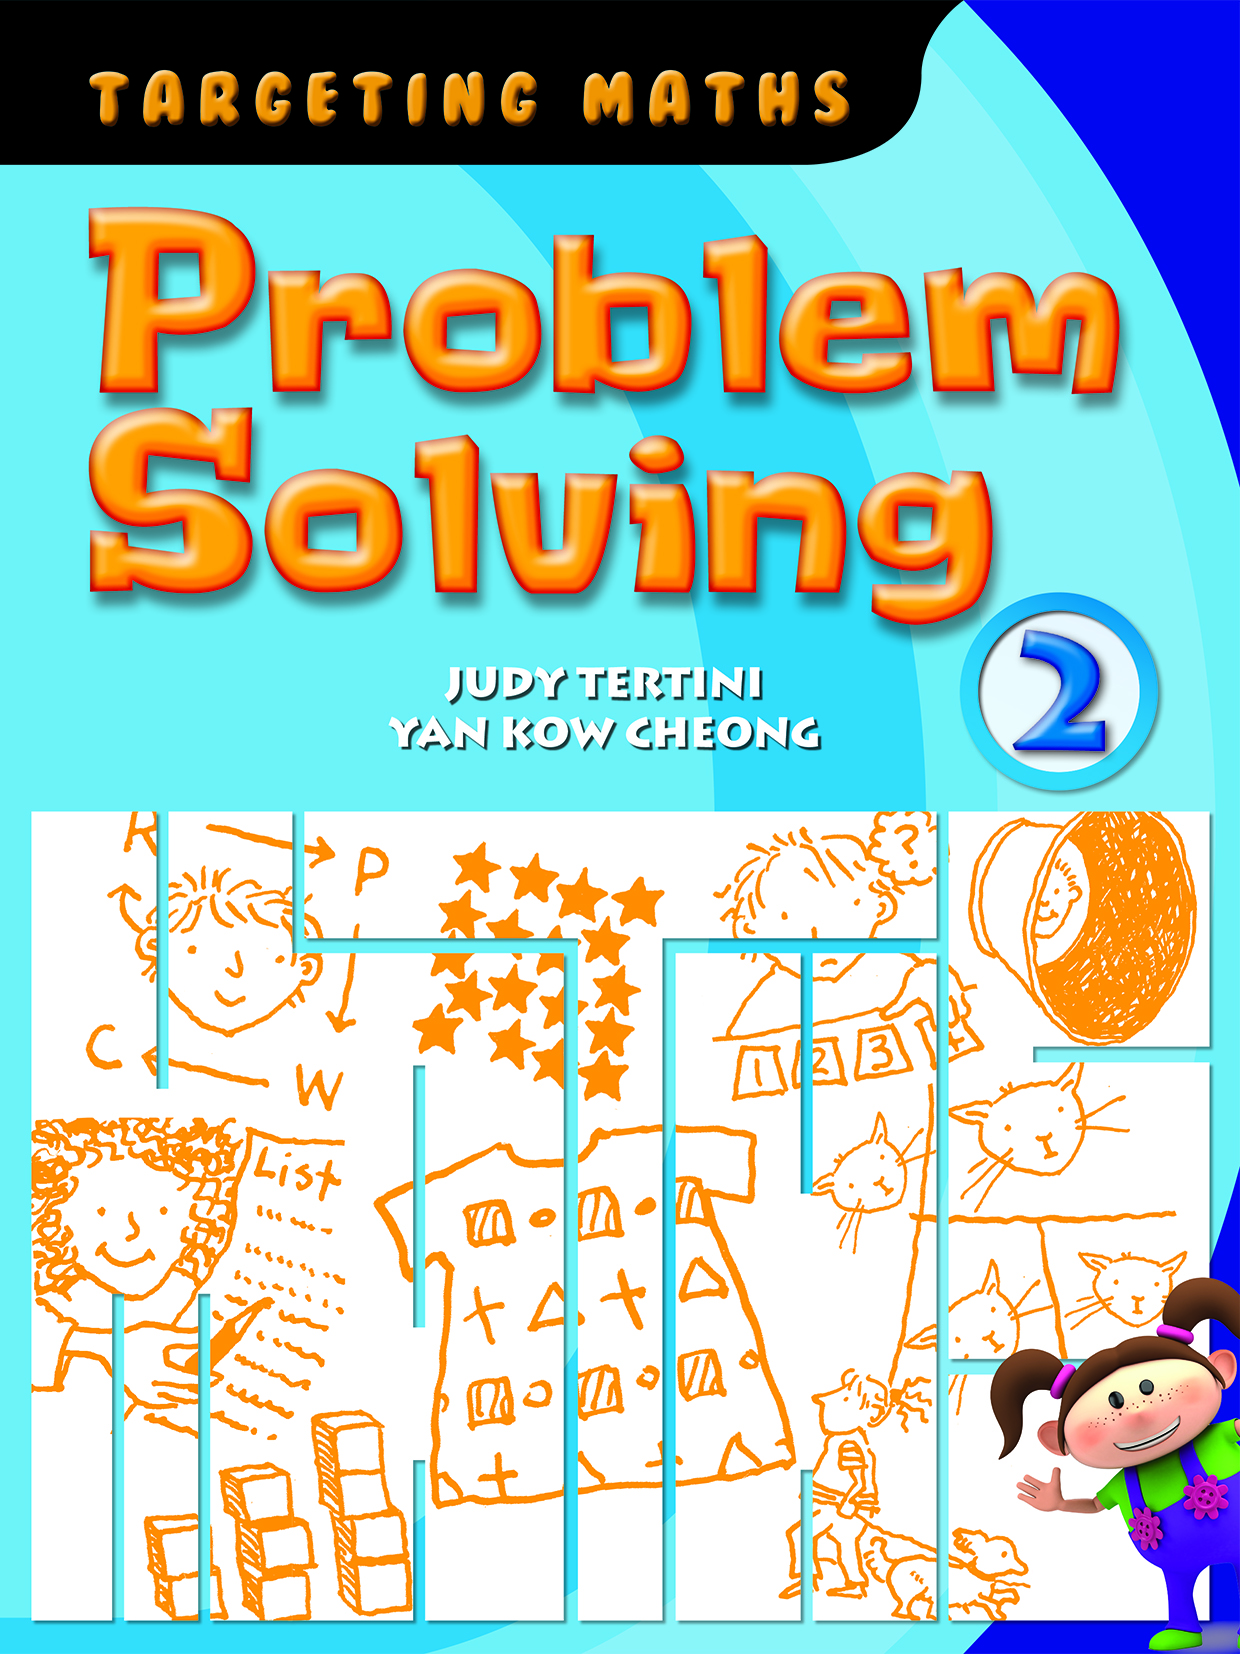 Targeting Maths Problem Solving 2